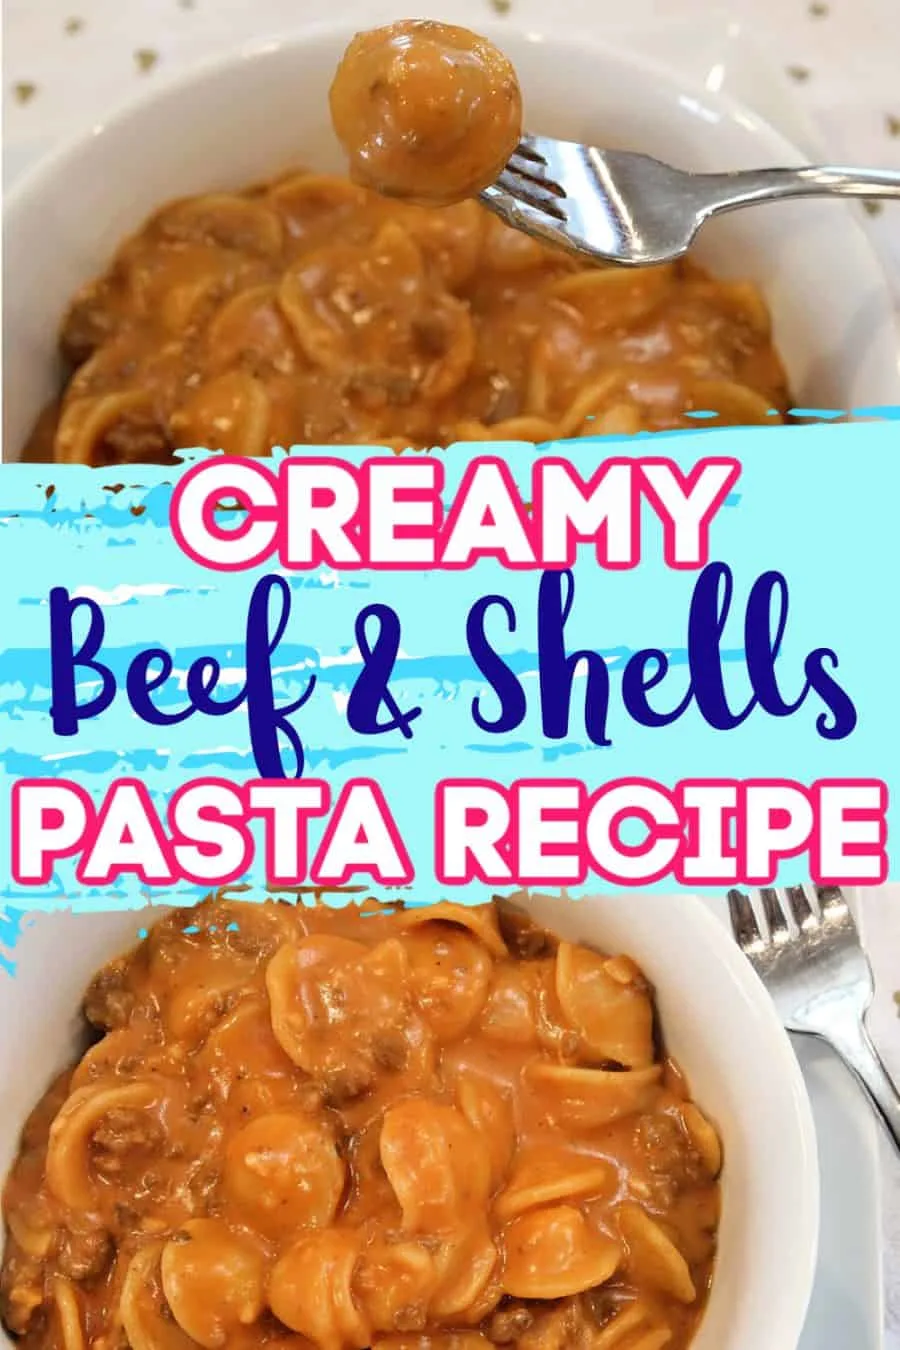 Creamy Beef And Shells Pasta Recipe